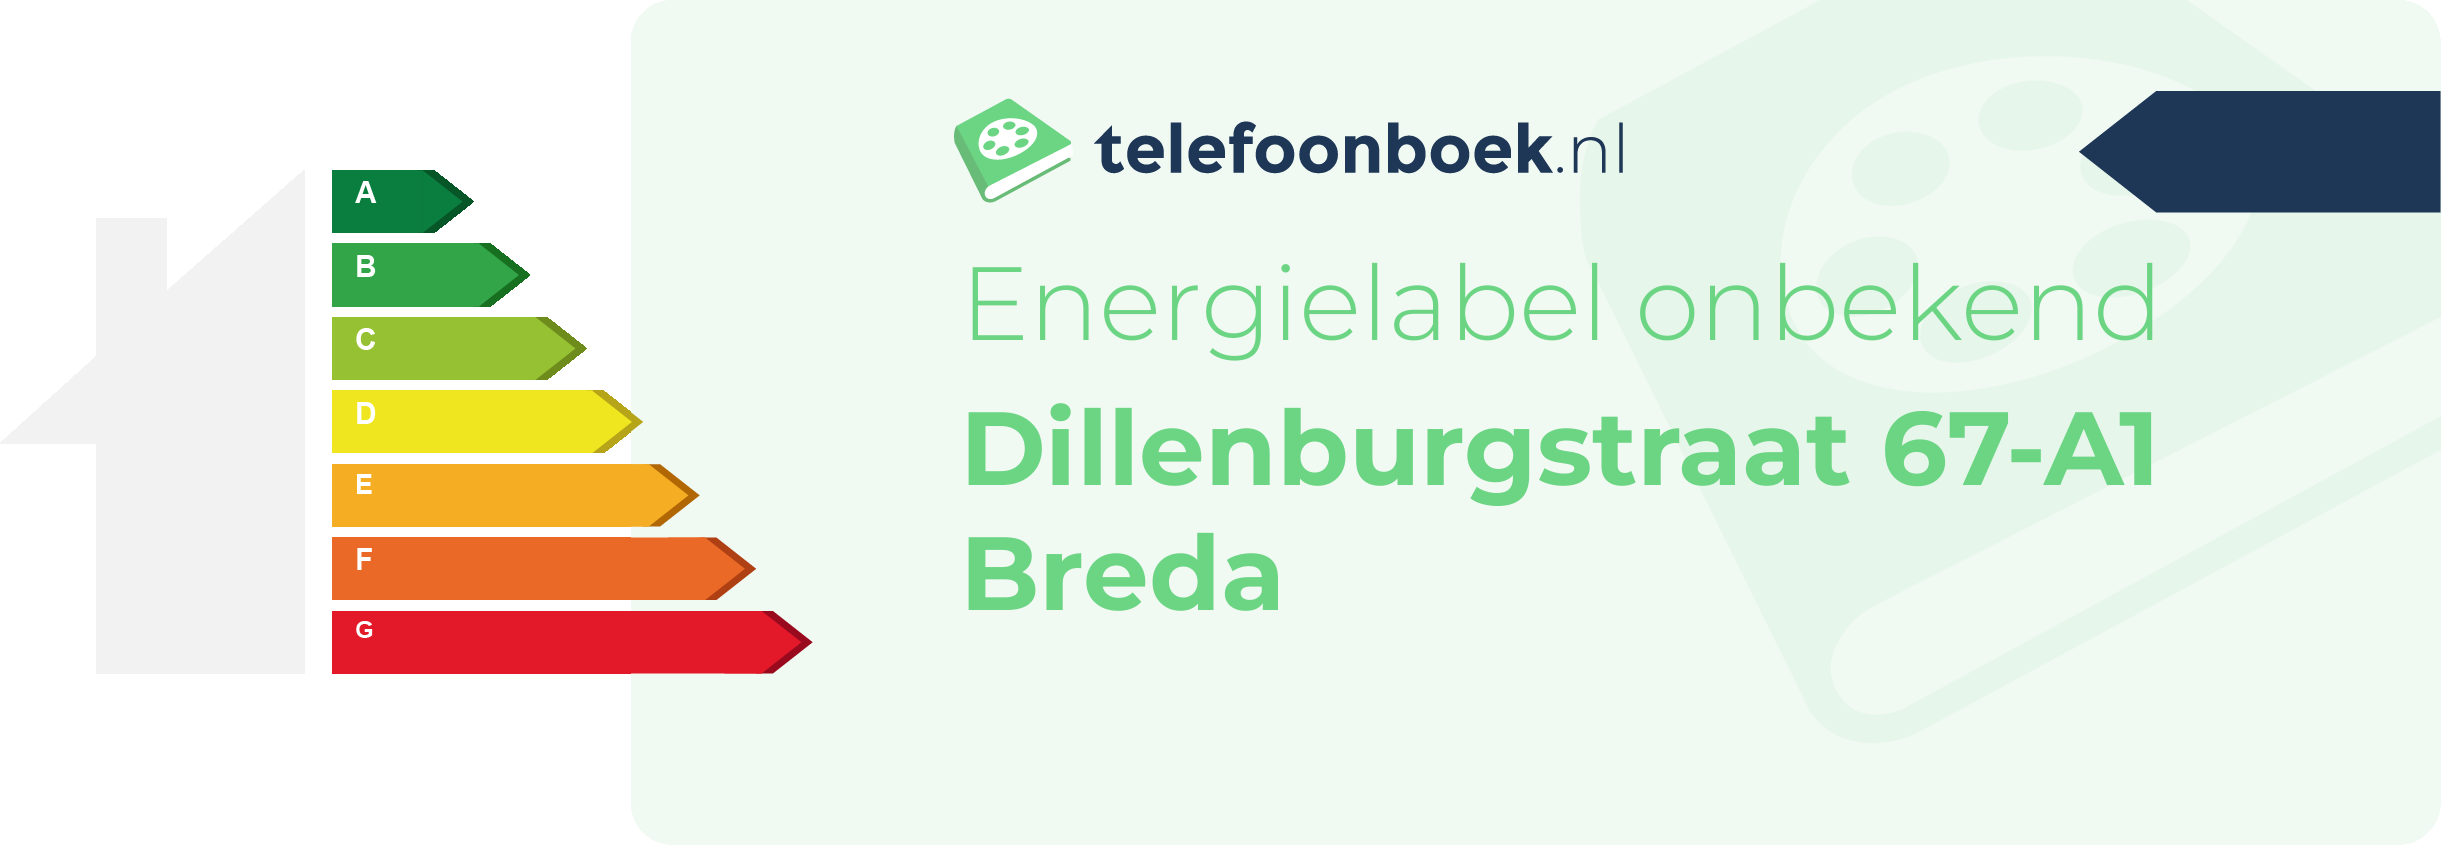 Energielabel Dillenburgstraat 67-A1 Breda